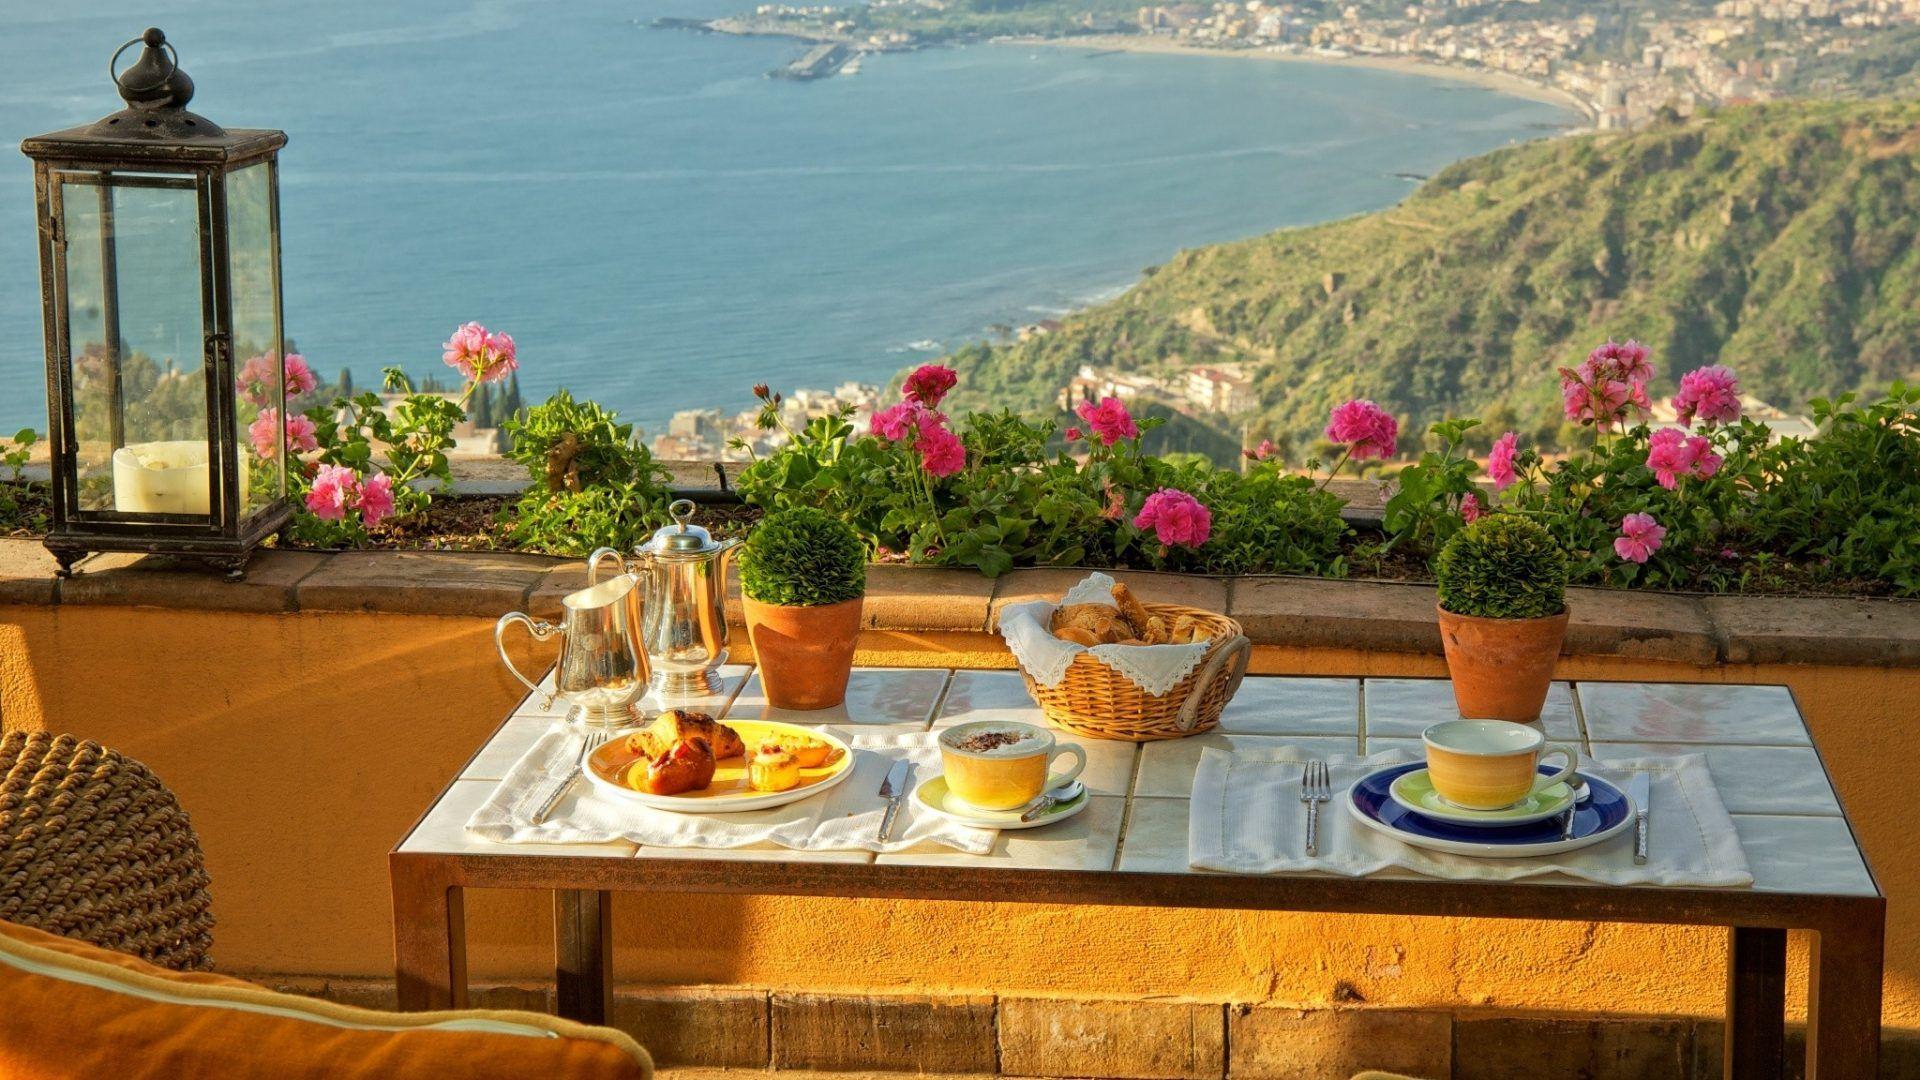 Sicilia Tag wallpaper: Houses Pretty Breakfast Candle Sea View City